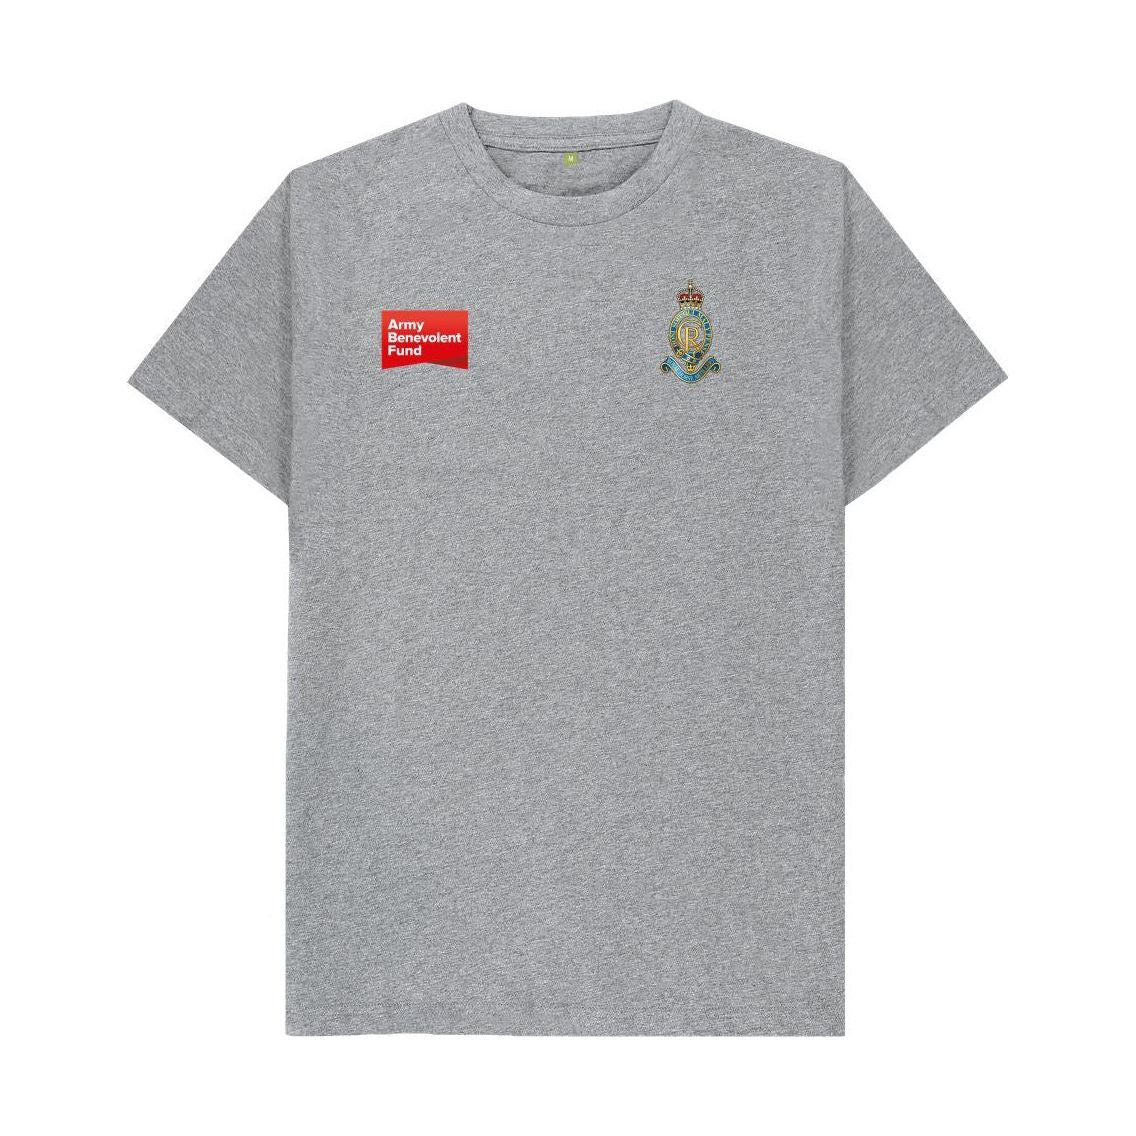 Royal Horse Artillery Unisex T-shirt - Army Benevolent Fund